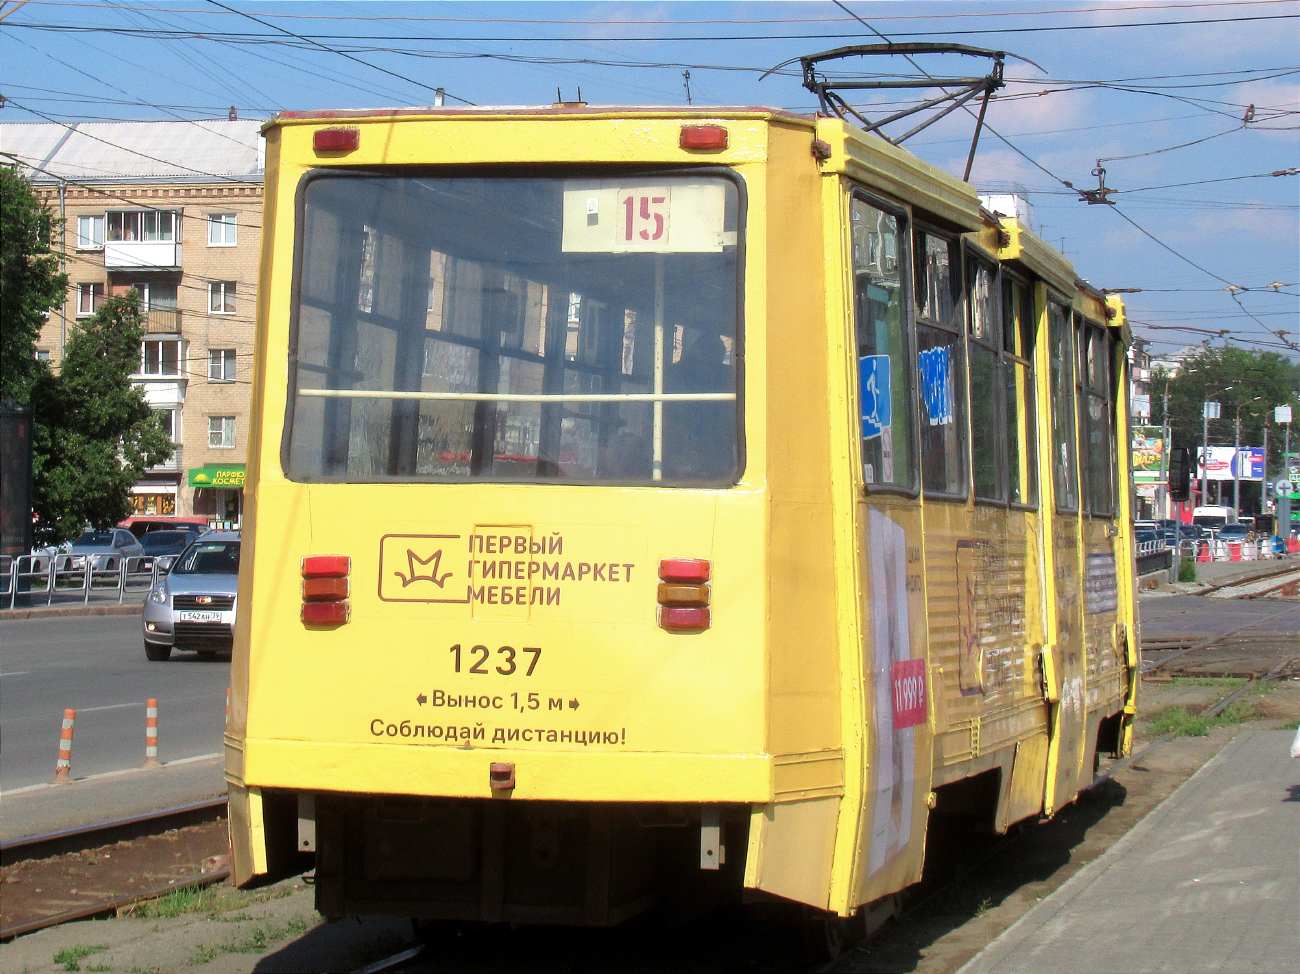 Chelyabinsk, 71-605 (KTM-5M3) nr. 1237